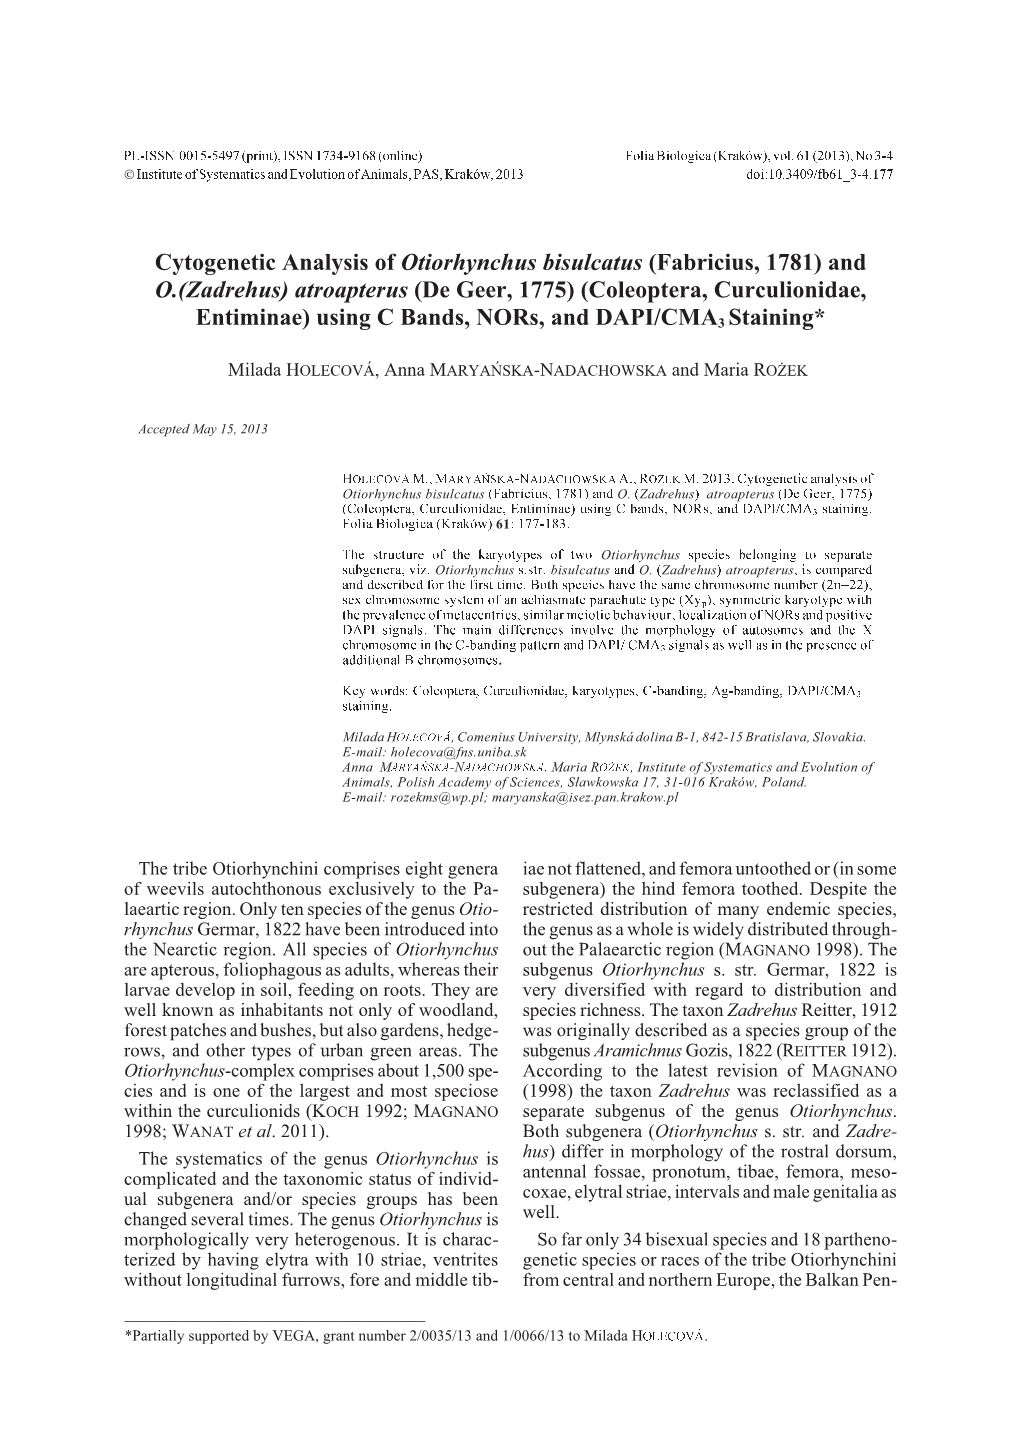 Cytogenetic Analysis of Otiorhynchus Bisulcatus (Fabricius, 1781) and O